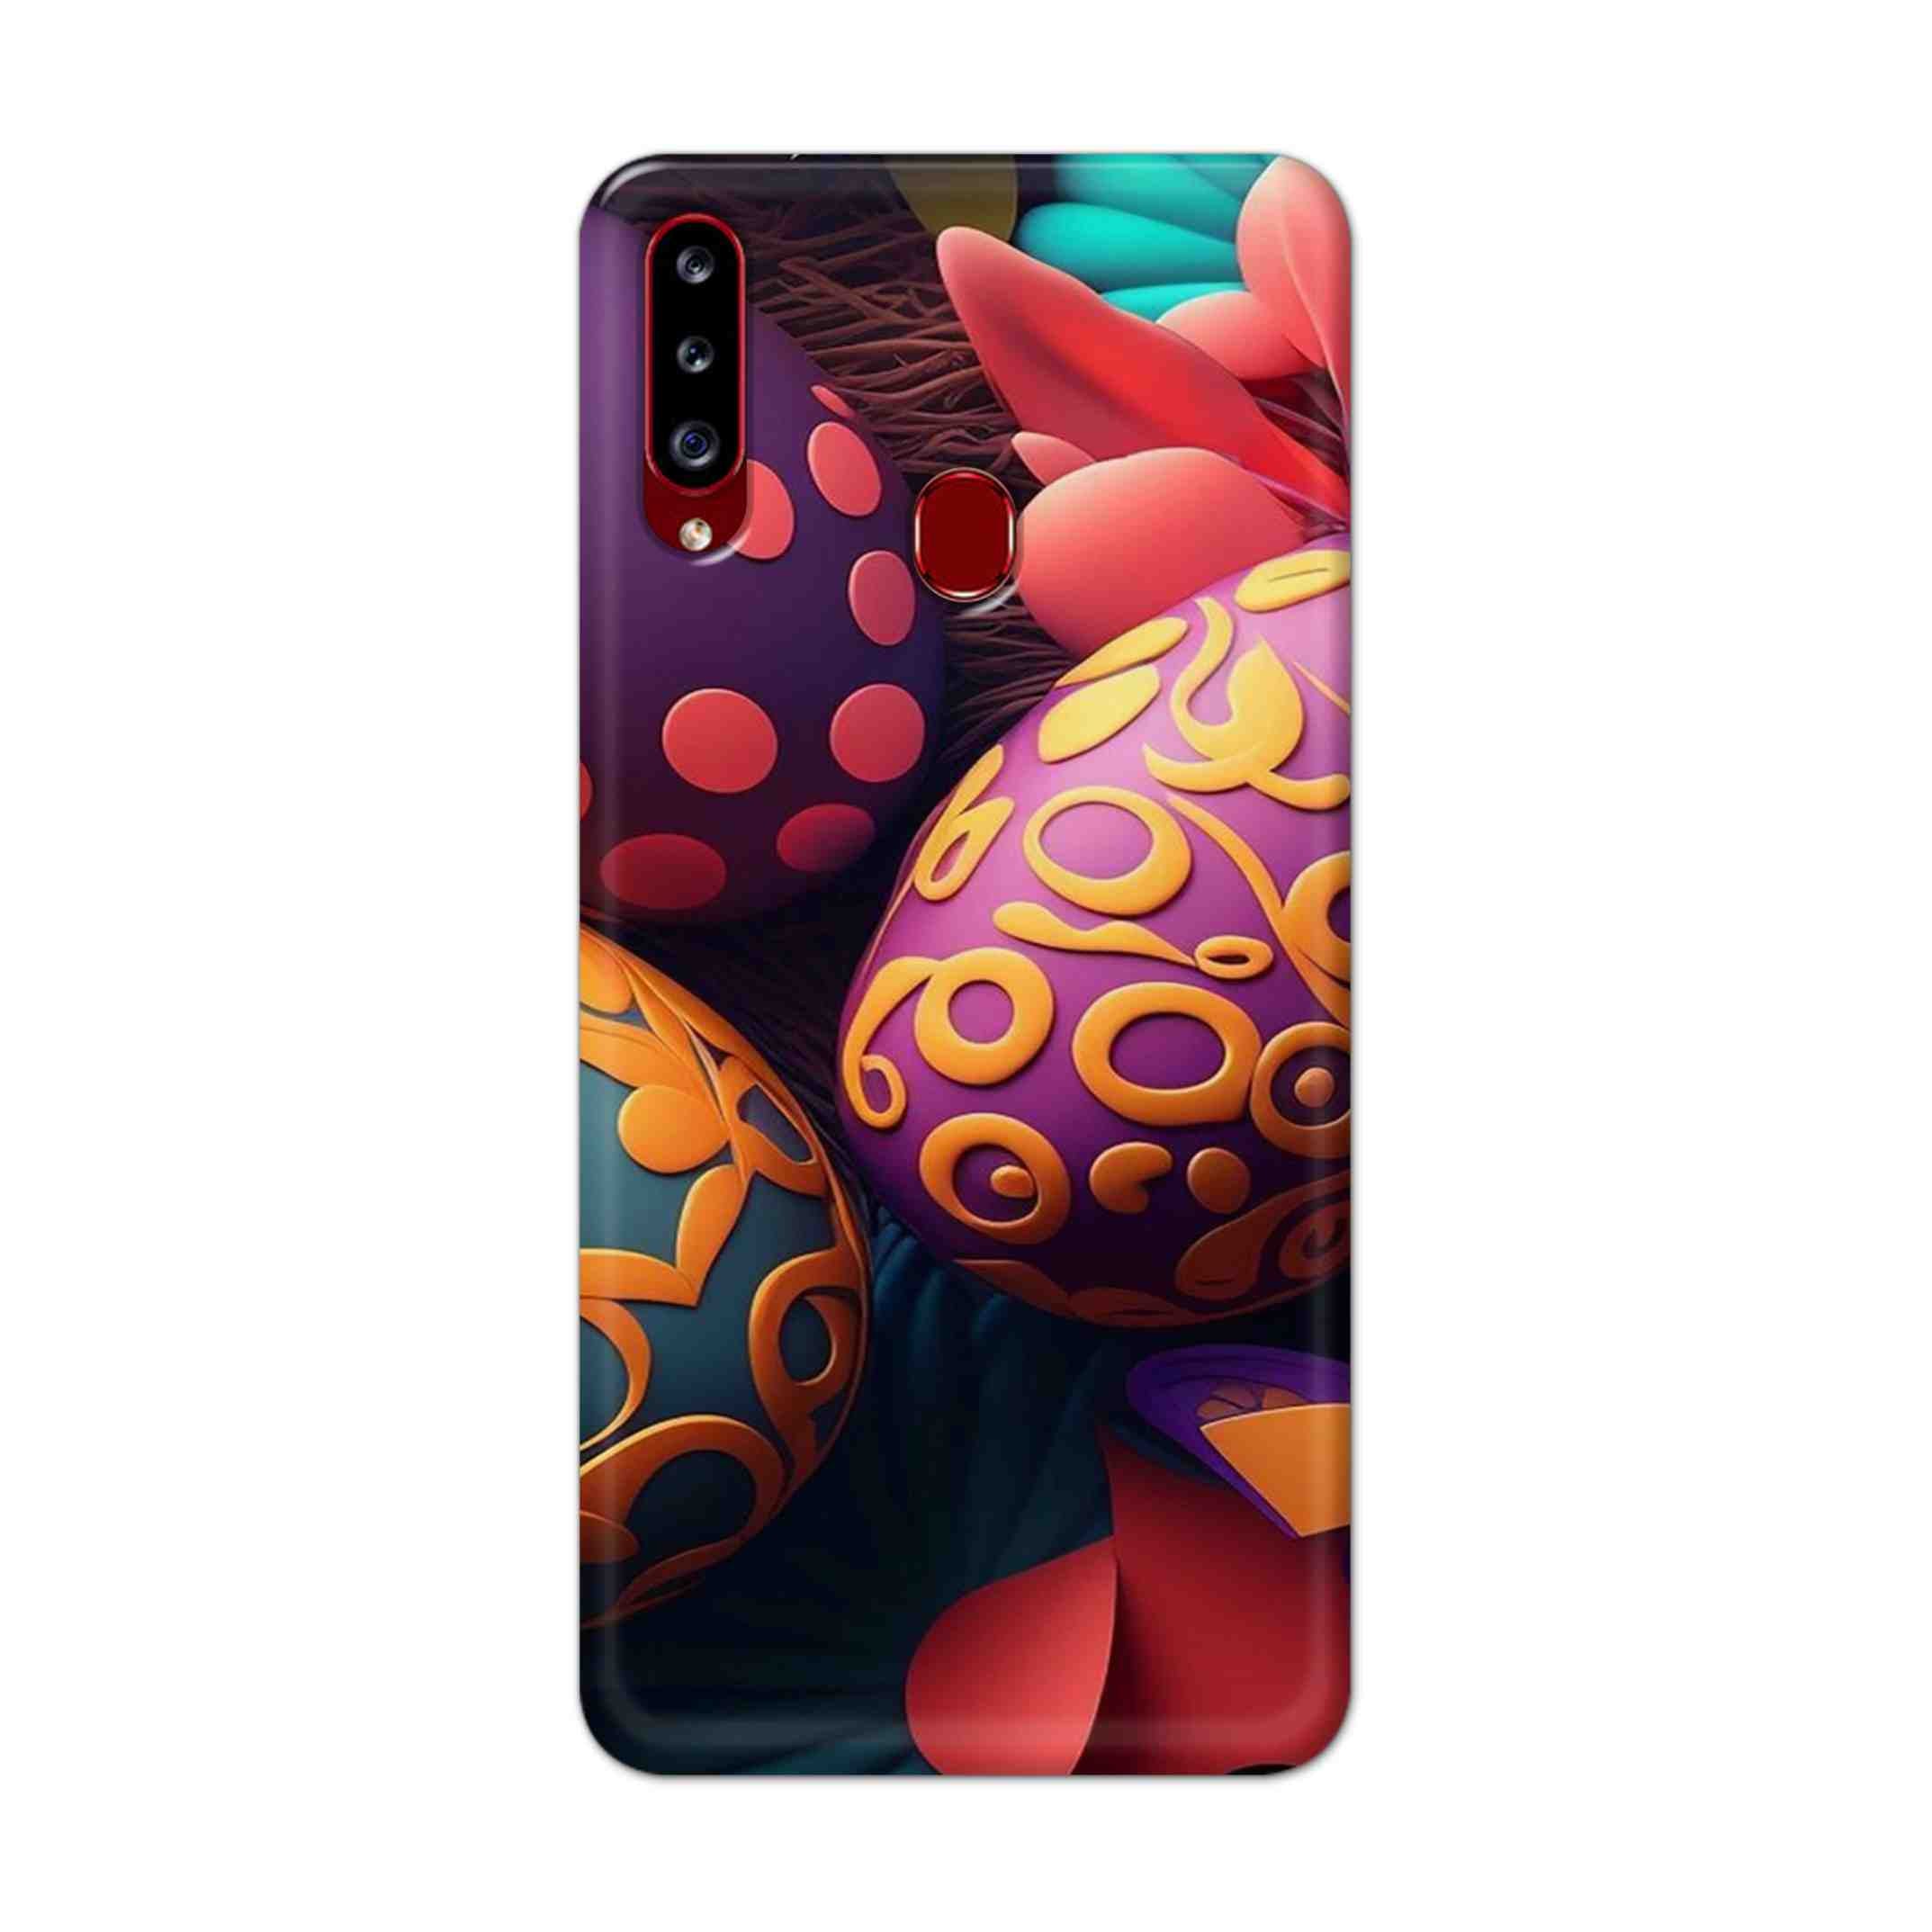 Buy Easter Egg Hard Back Mobile Phone Case Cover For Samsung A20s Online